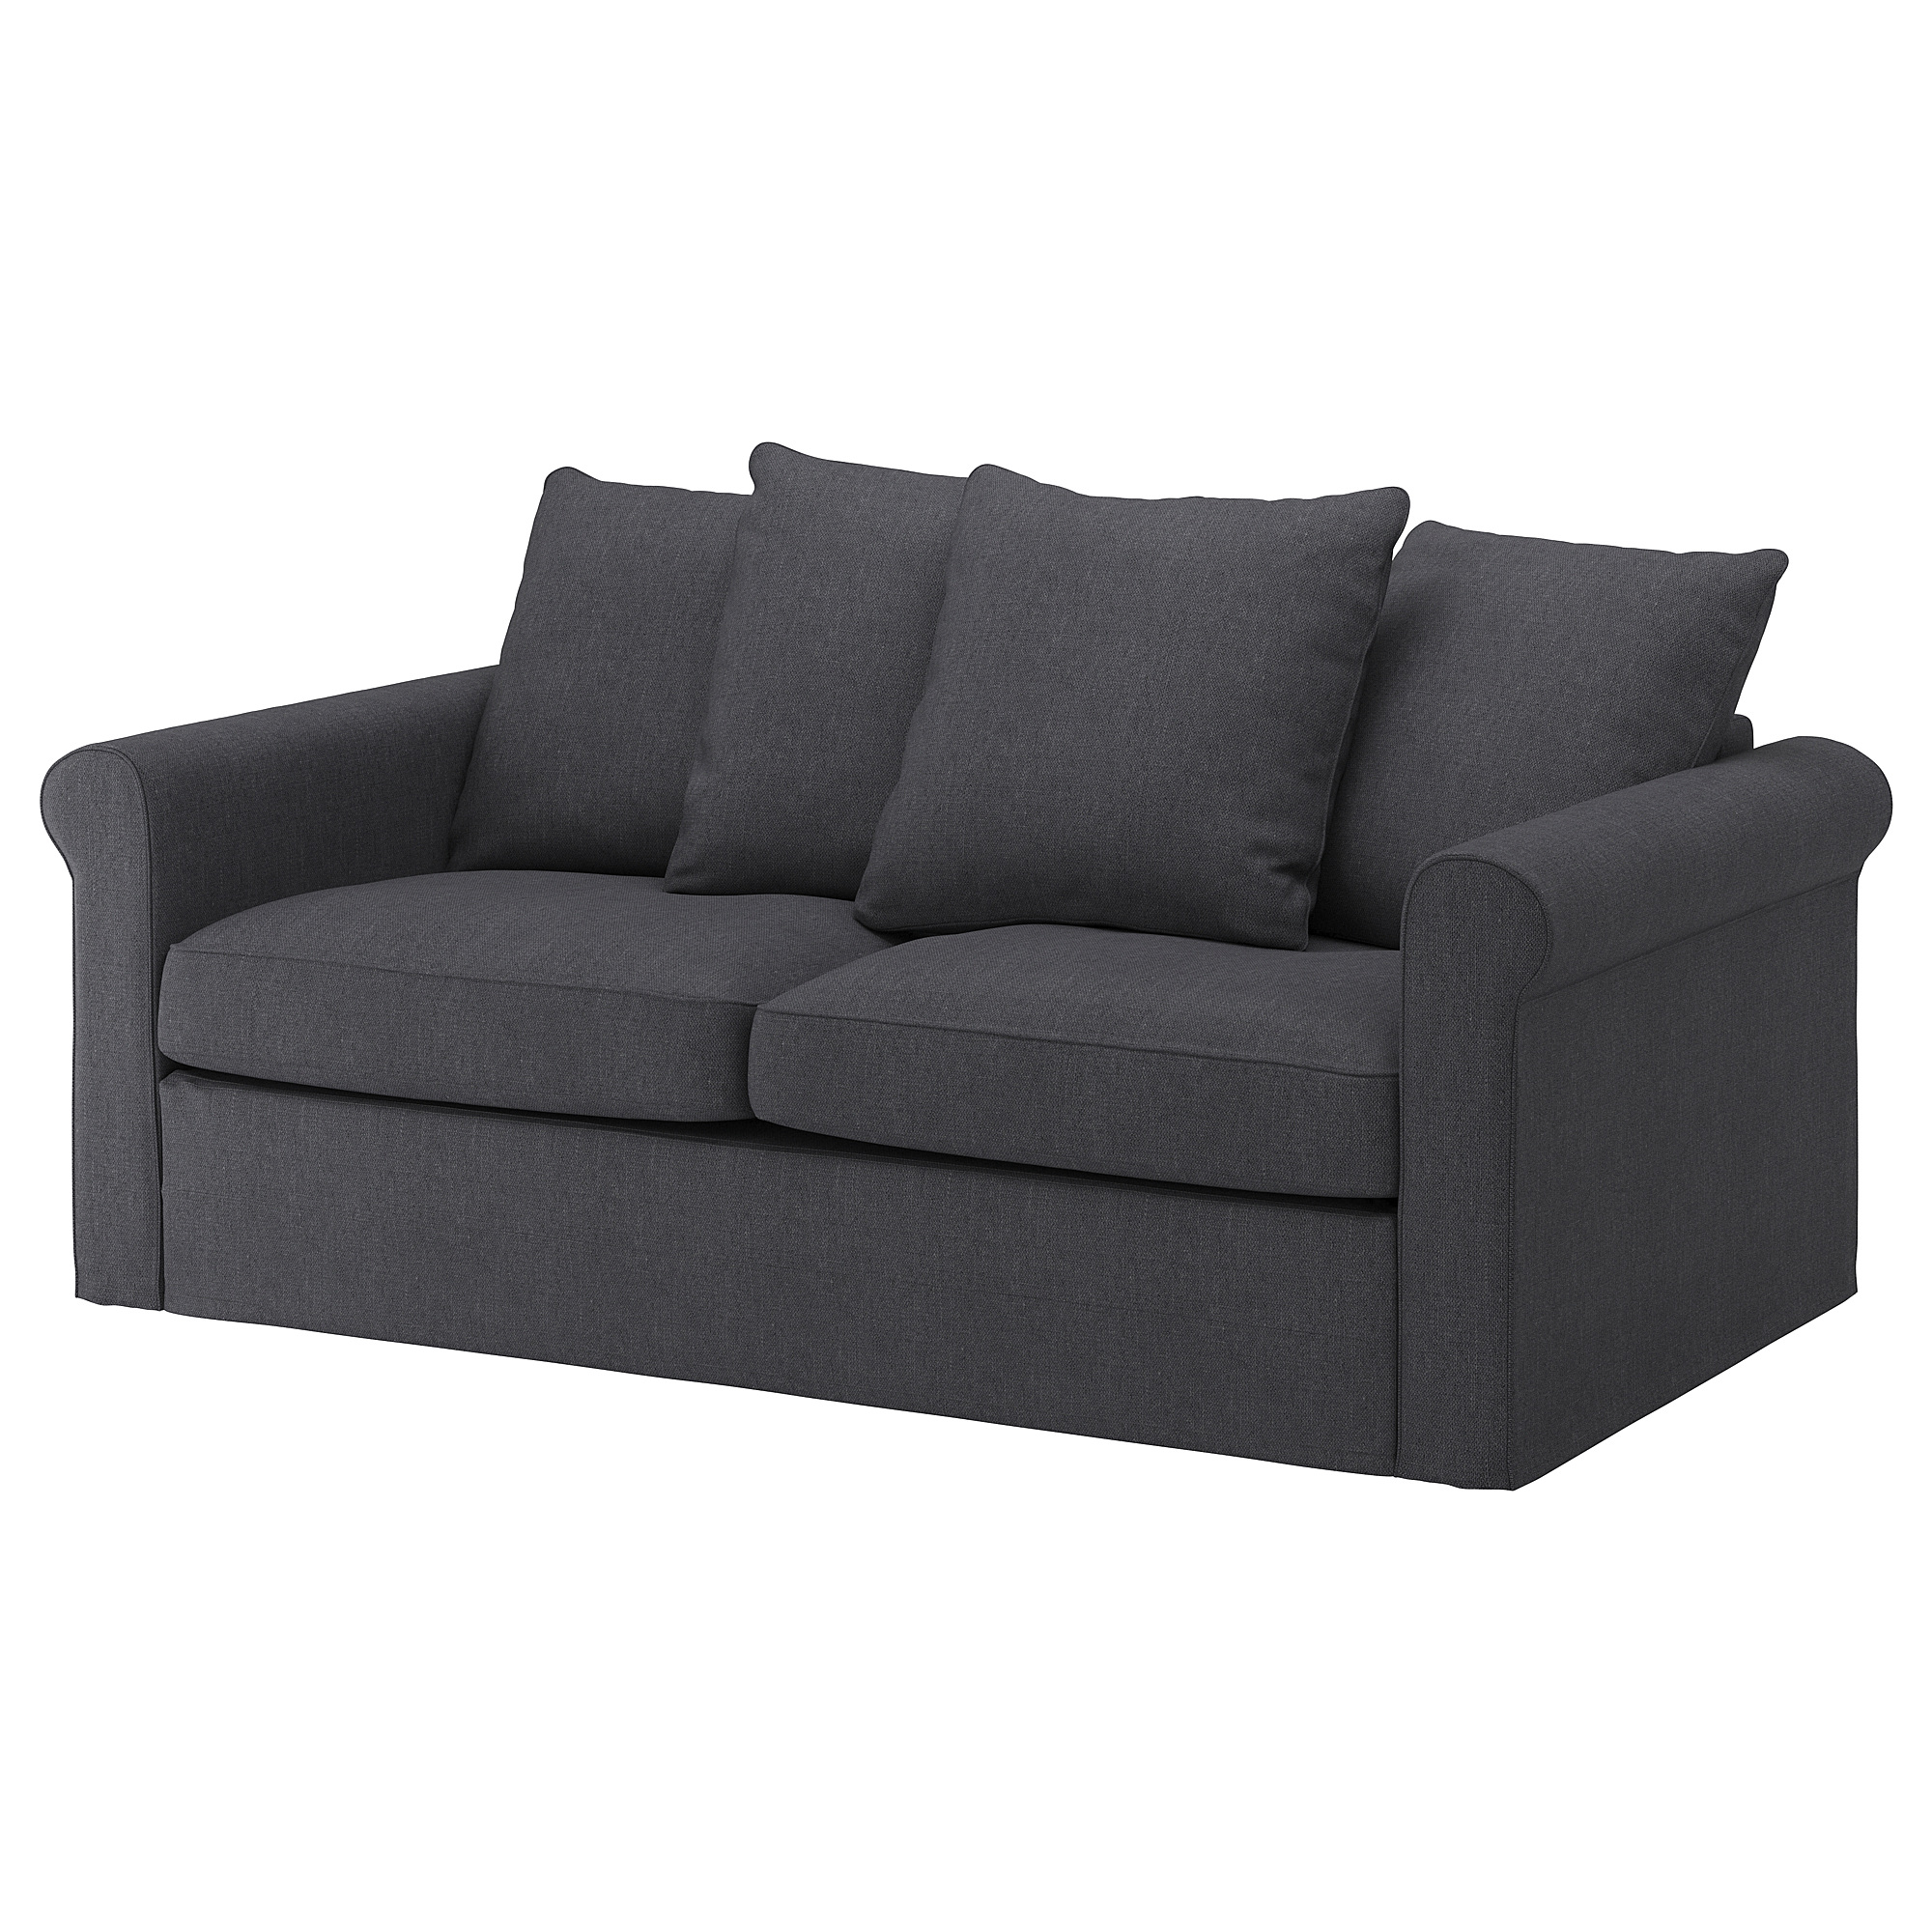 GRÖNLID 2-seat sofa-bed